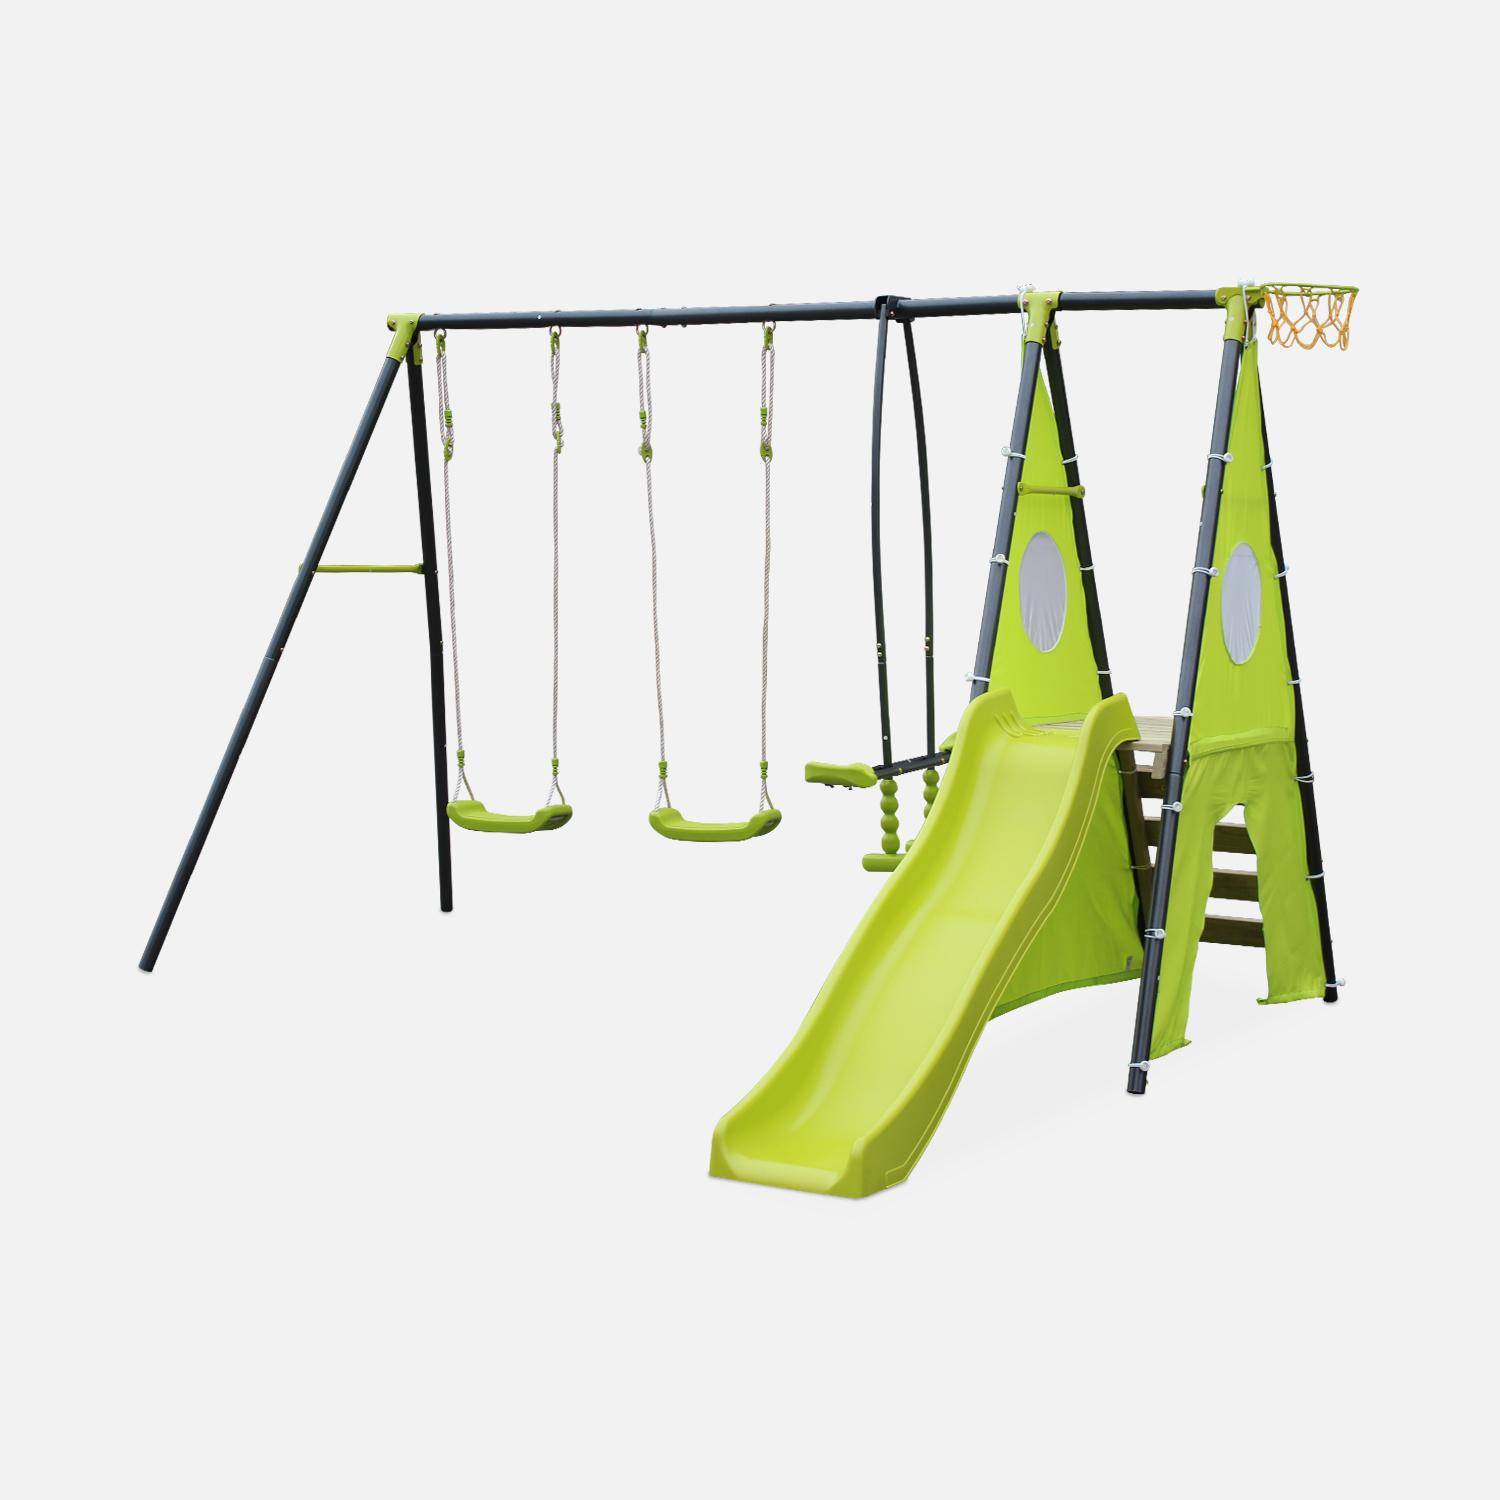 5-piece swing: 2 swings, 1 face to face, 1 slide, 1 basketball hoop, 1 climbing wall and 1 tipi, Libeccio,sweeek,Photo1